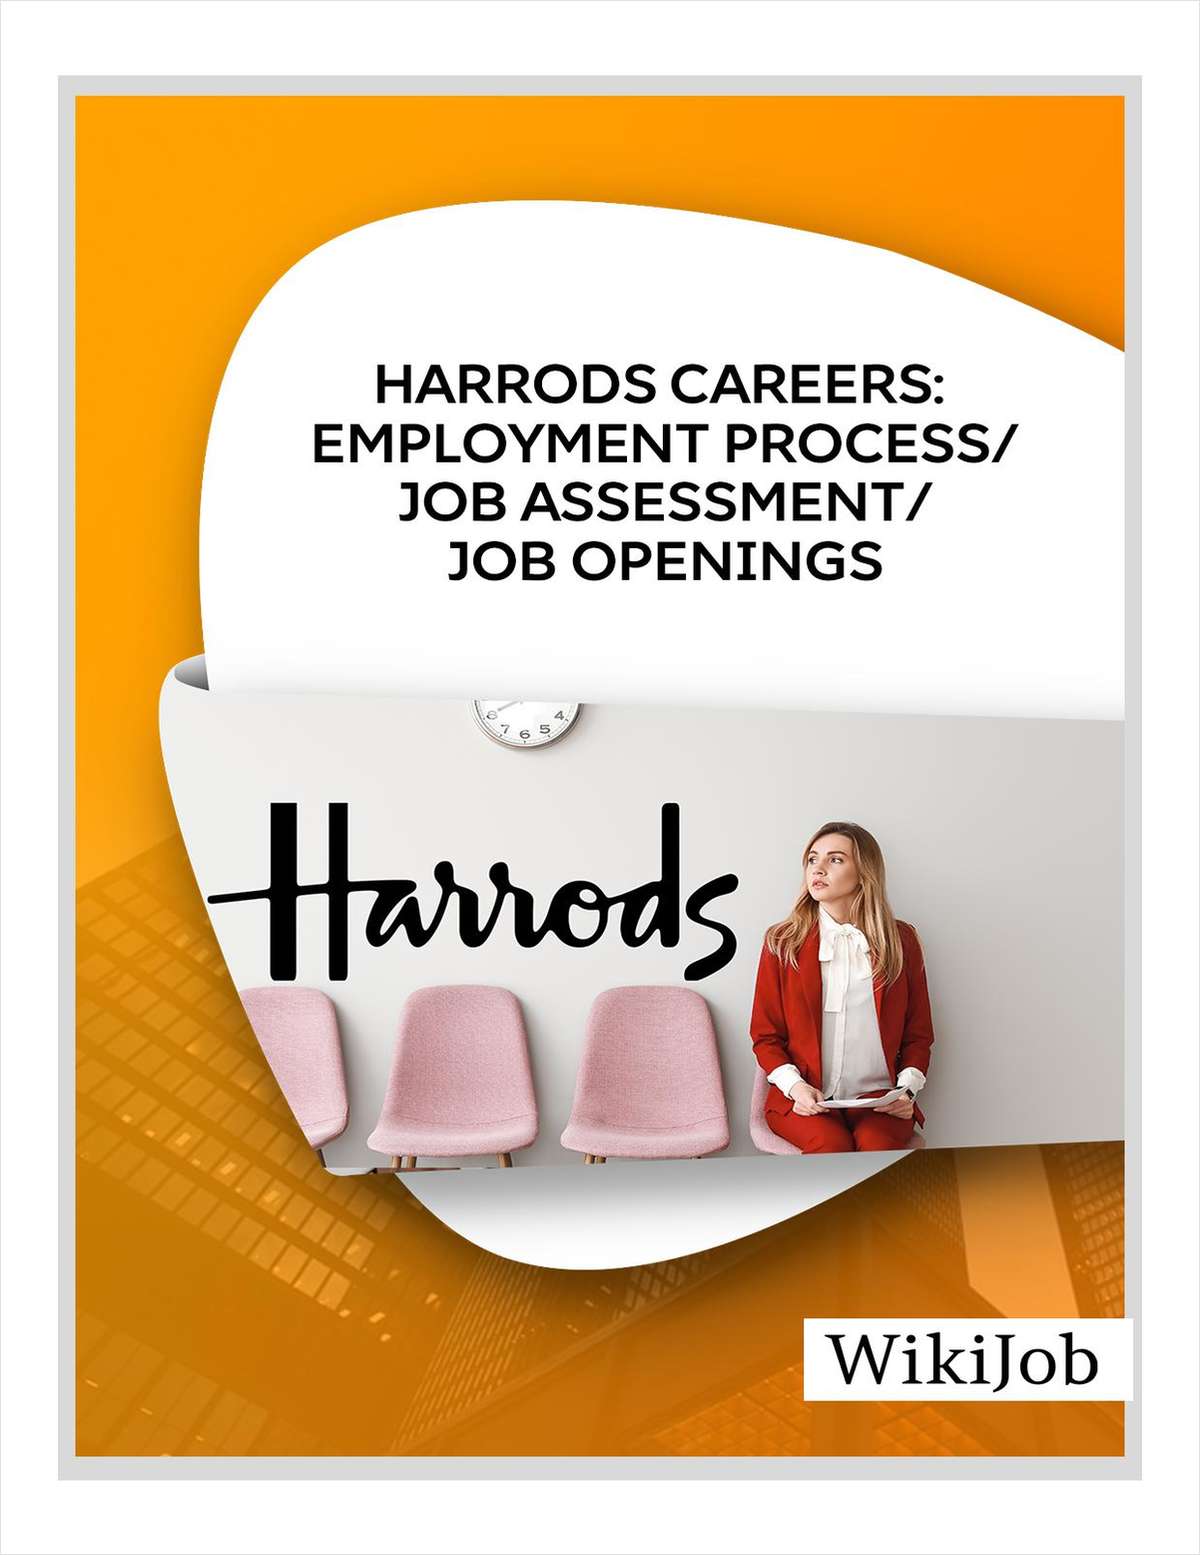 Harrods Careers: Employment Process/Job Assessment/Job Openings